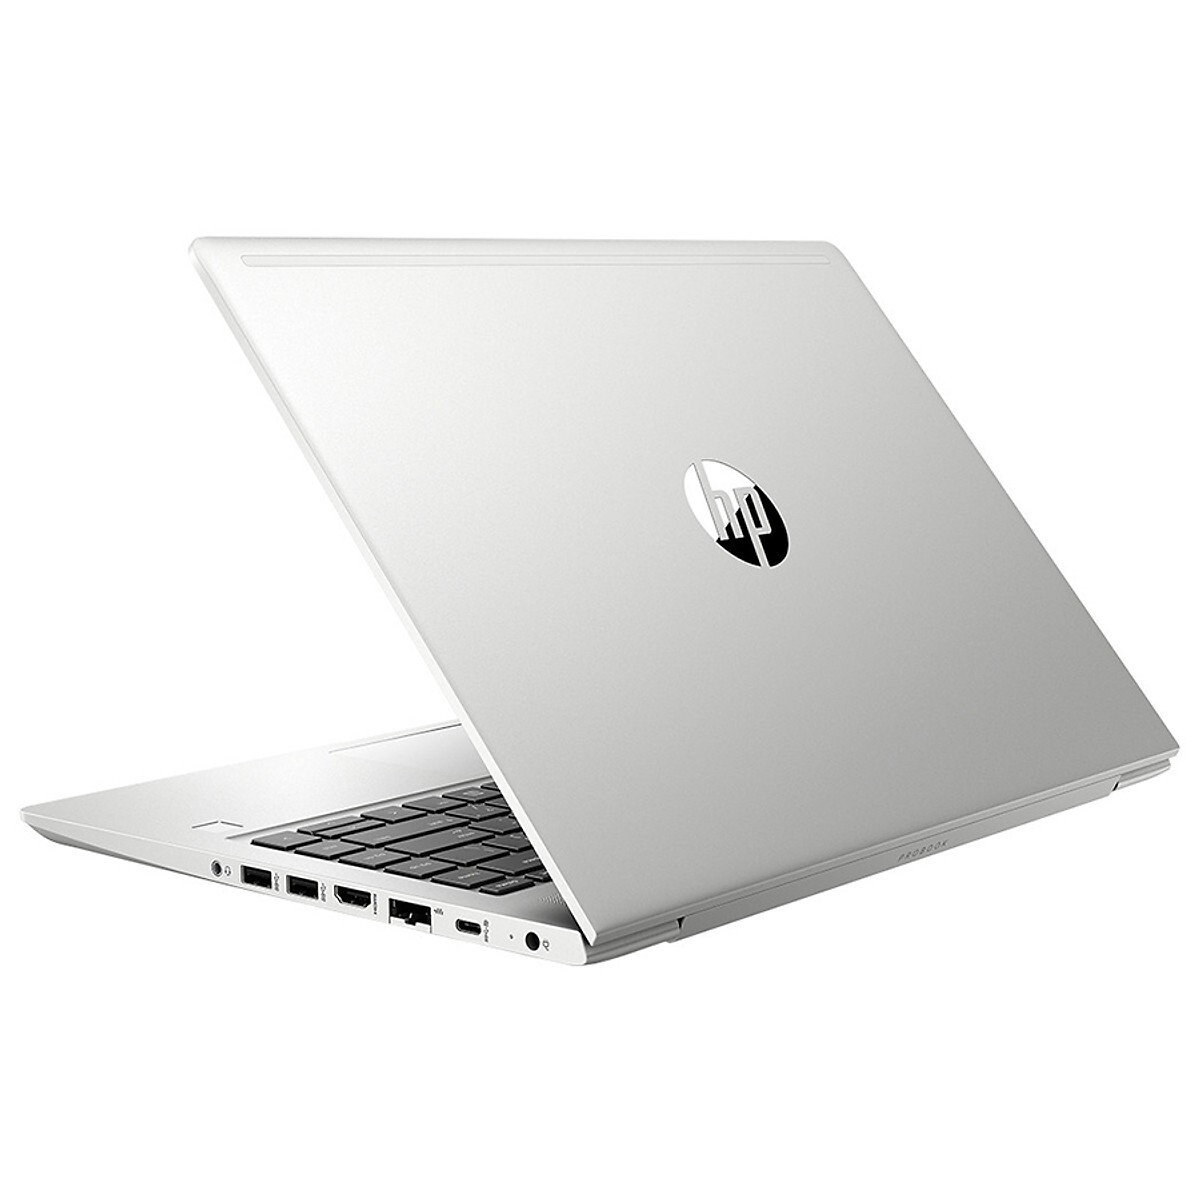 Laptop HP ProBook 450 G6 8AZ17PA - Intel Core i5-8265U, 8GB RAM, SSD 256GB, Intel UHD Graphics 620, 15.6 inch